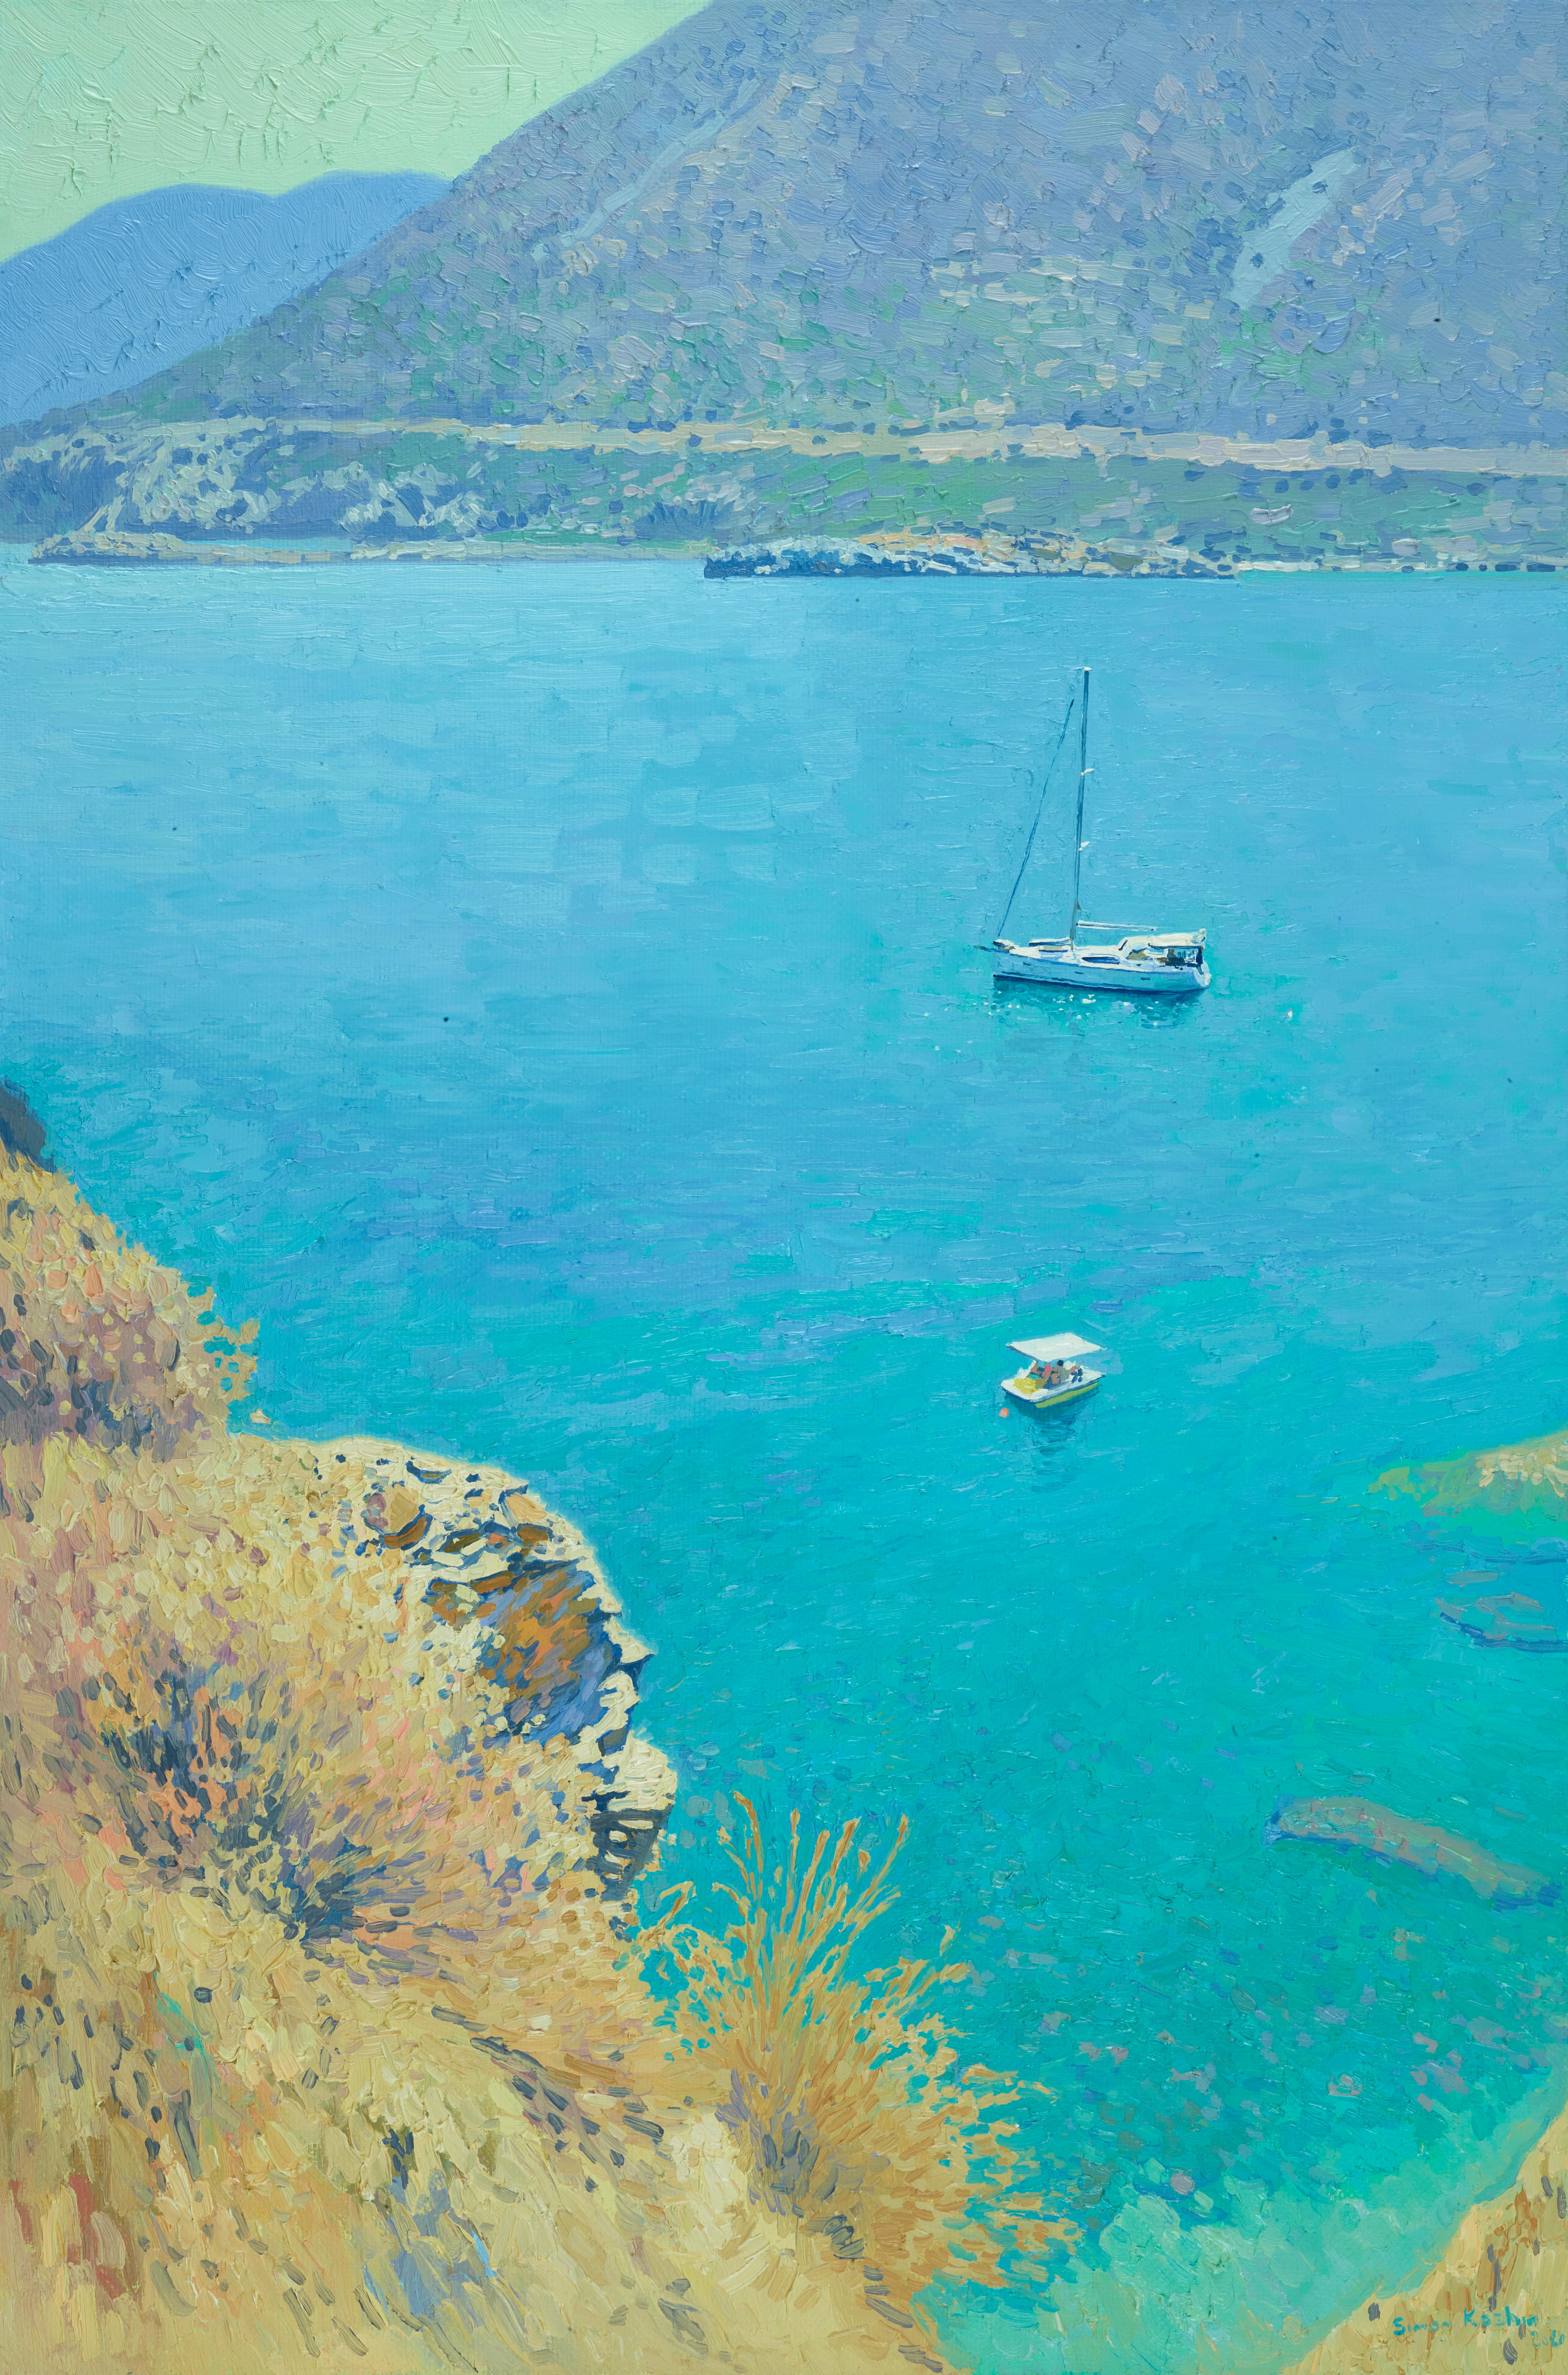 Harbor near Bali. Crete. - Painting by Simon Kozhin